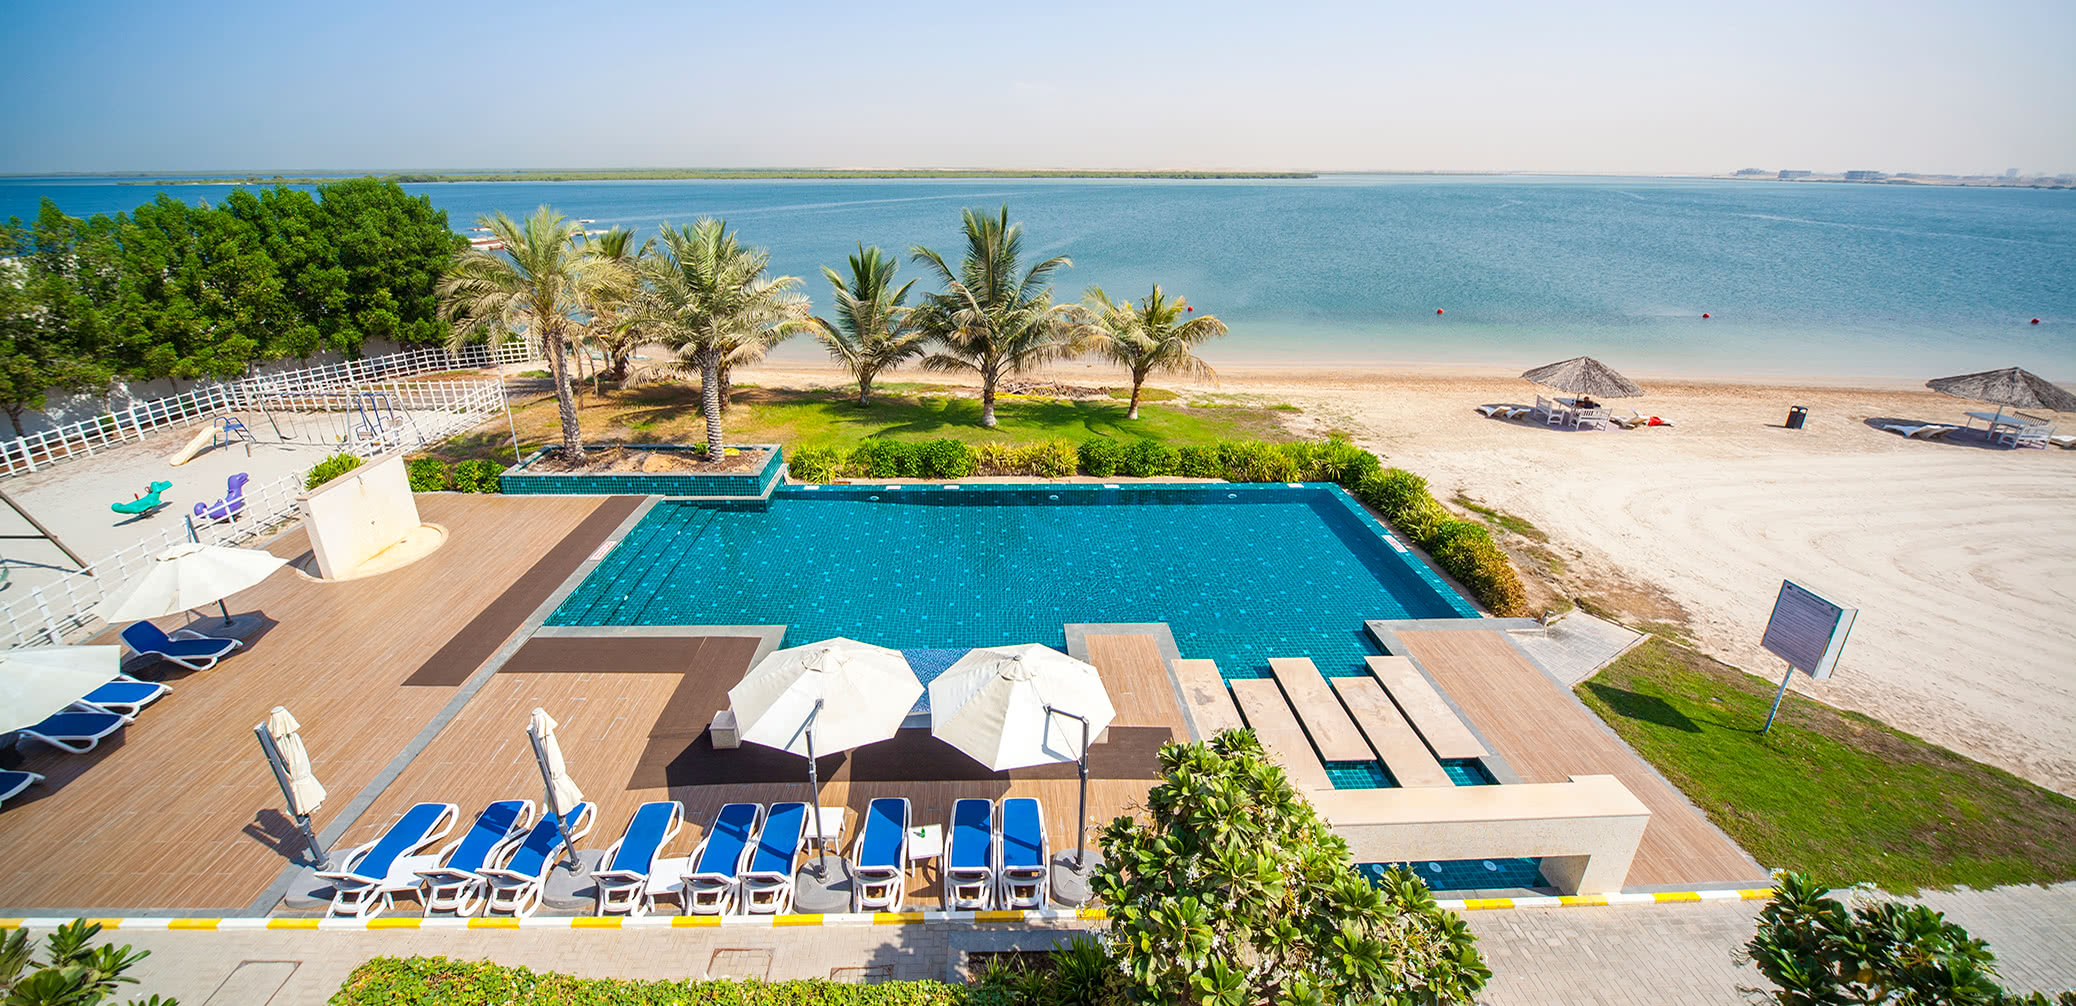 Review: Pearl Hotel & Spa, Umm Al Quwain, UAE